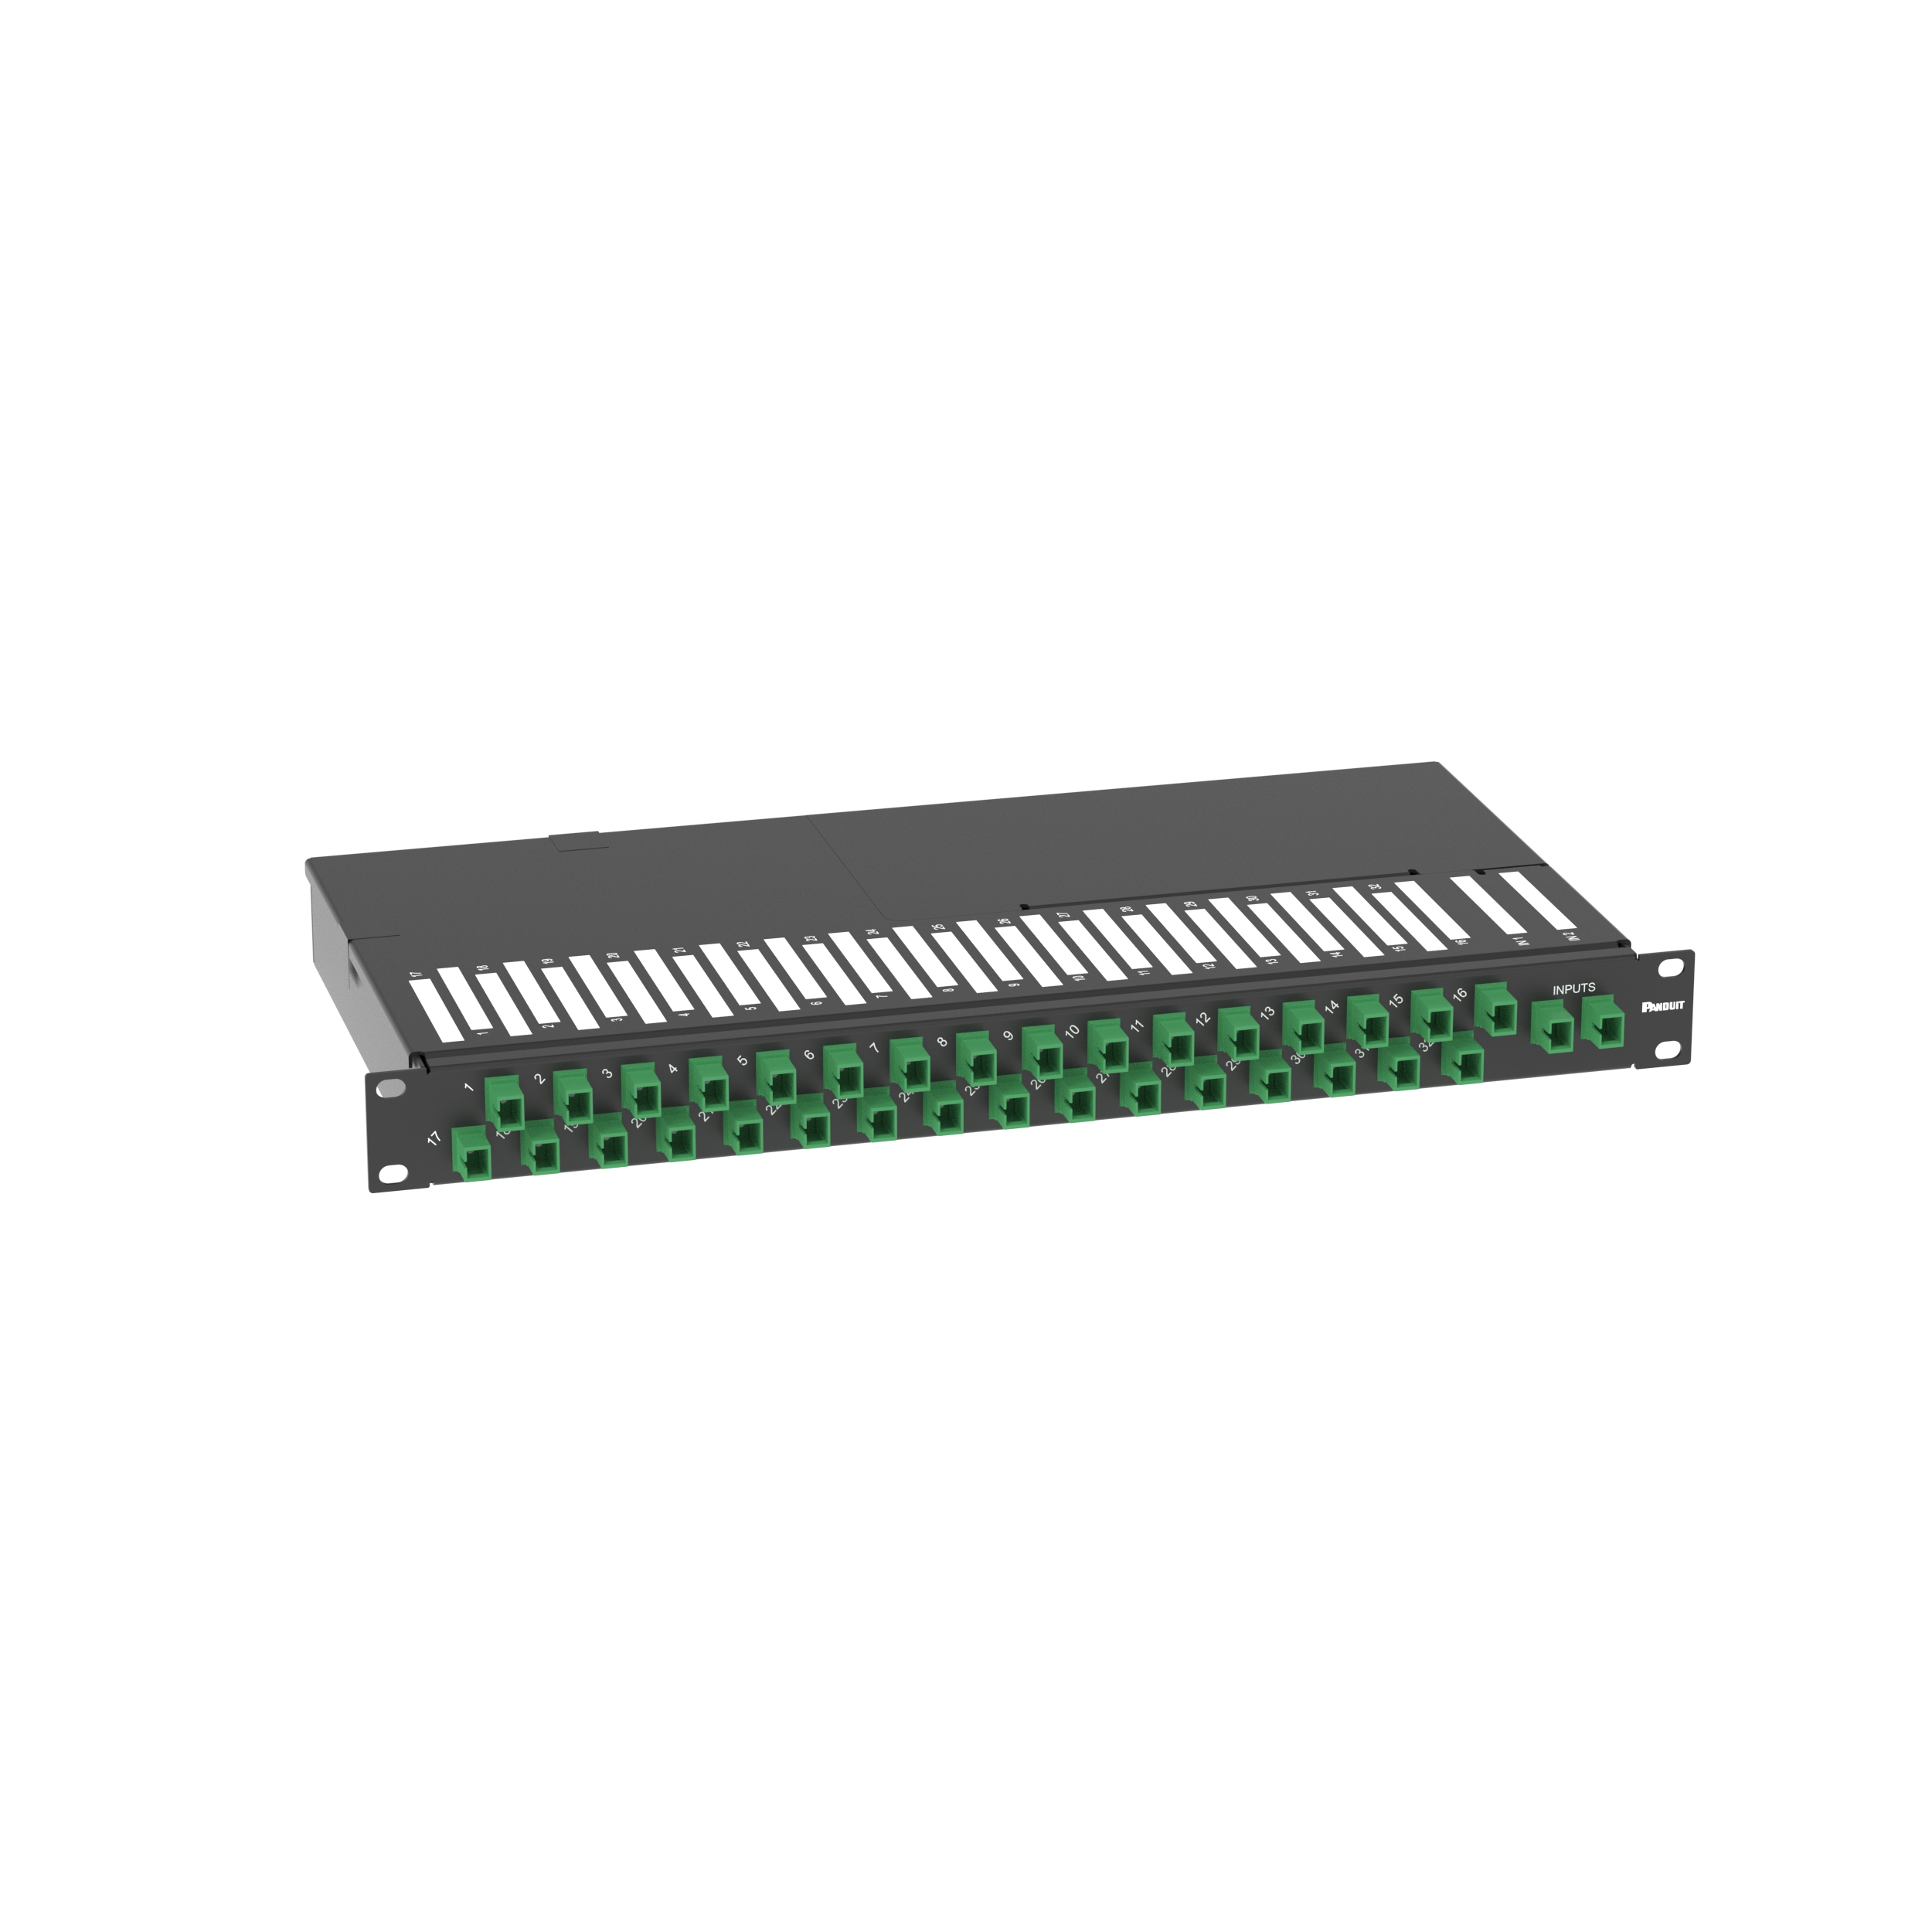 1 RU Splitter Tray for PON, 2 x SC-APC Input to 32 x SC-APC Outputs (2 x 32)